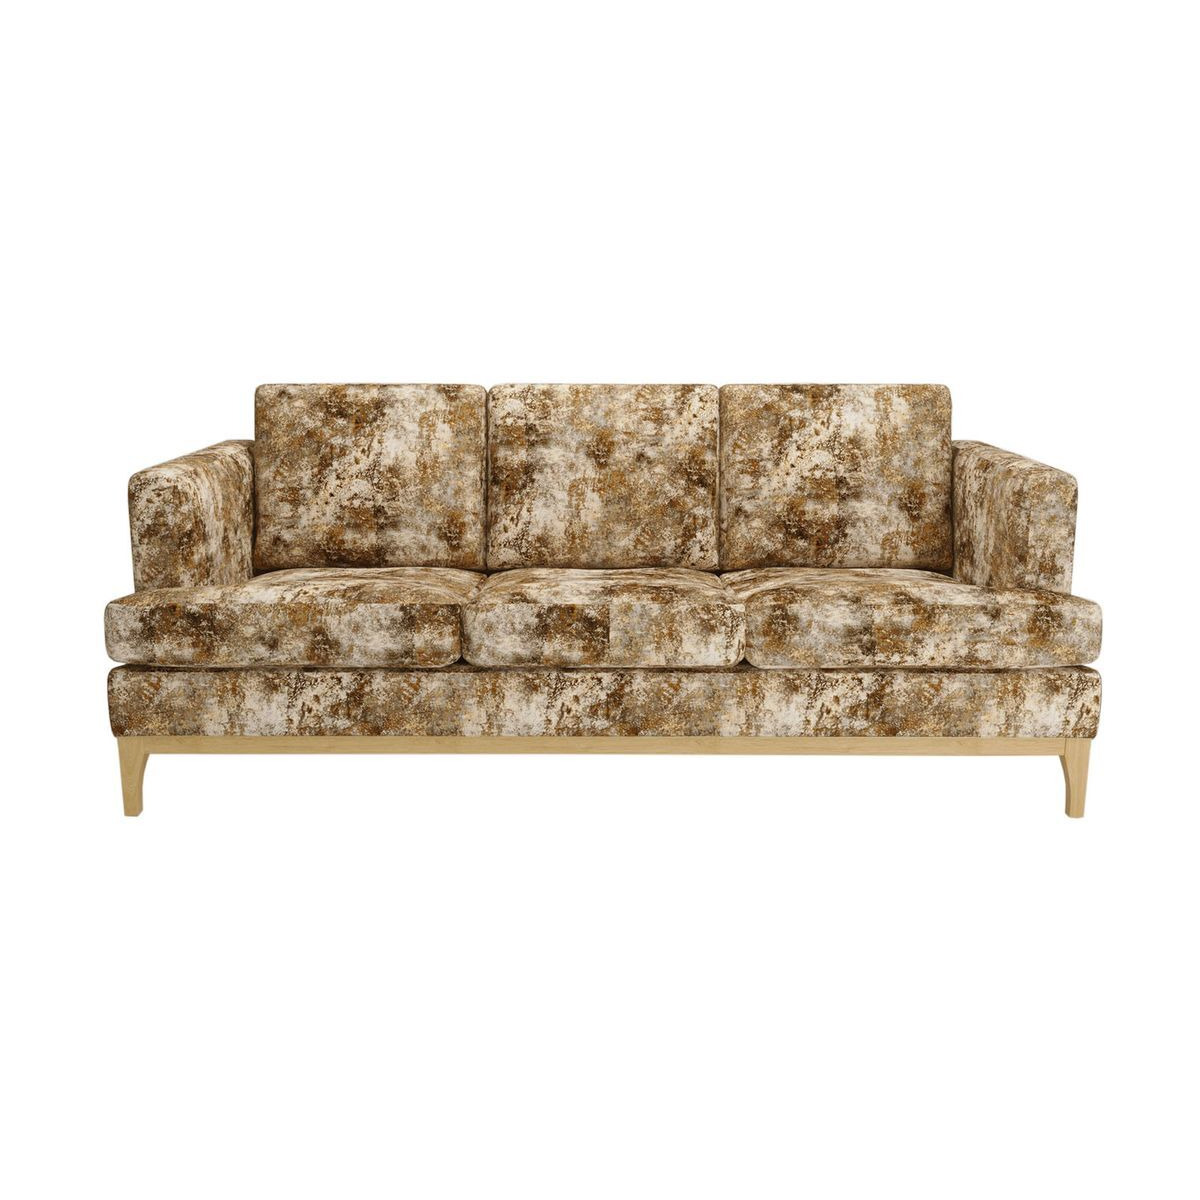 Scarlett Design 3 Seater Sofa, brown, Leg colour: like oak - image 1